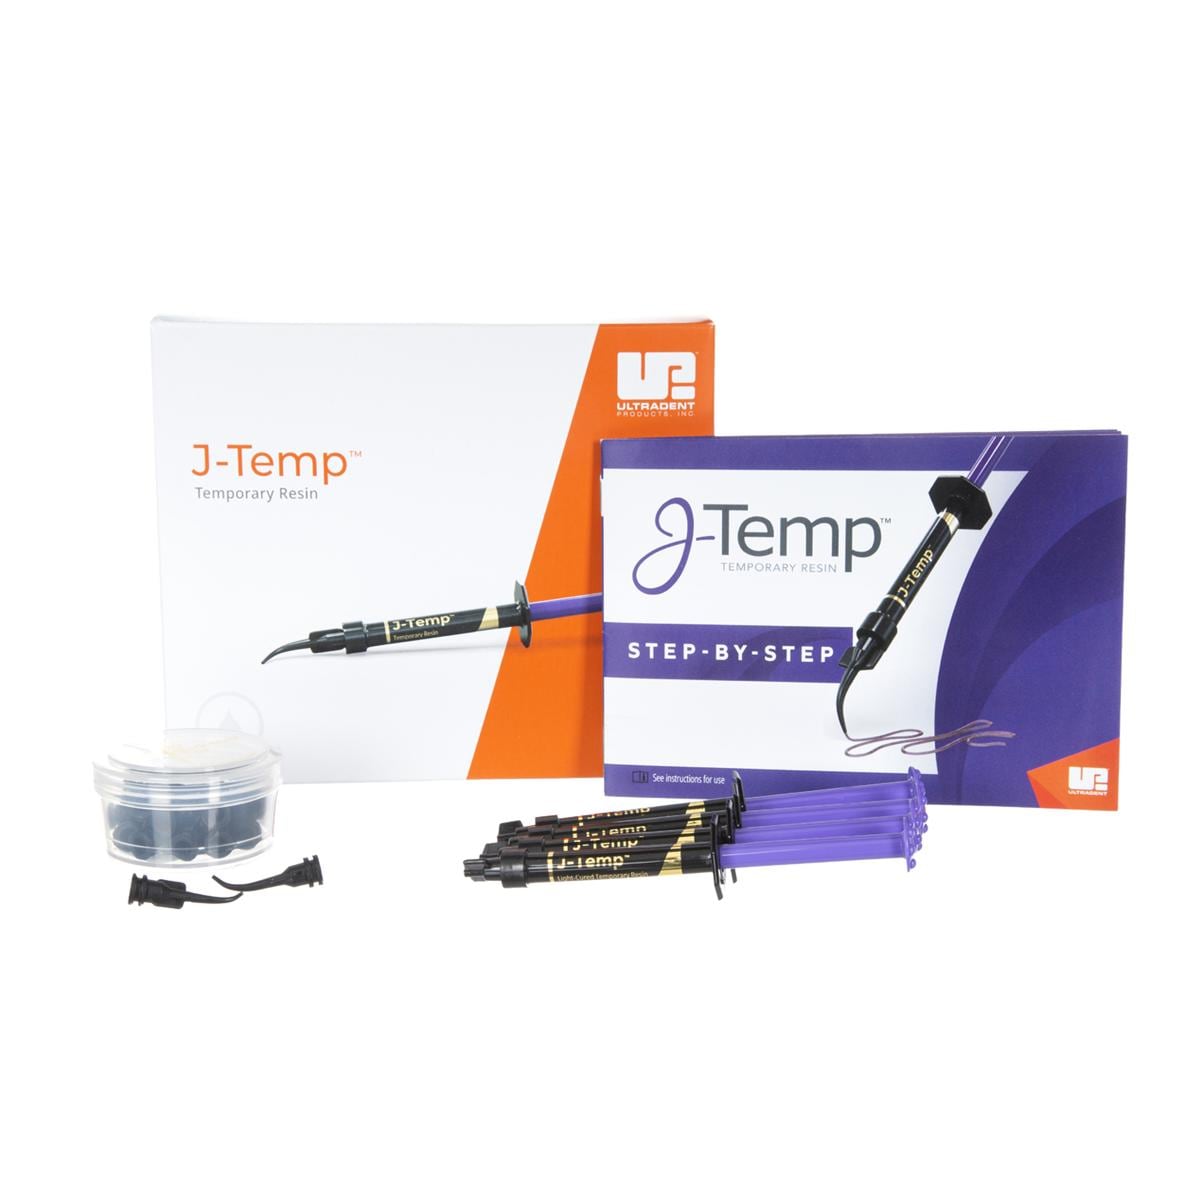 J-Temp Temporary Resin - 4x 1.2 ml spuitjes en 20 Black Mini tips